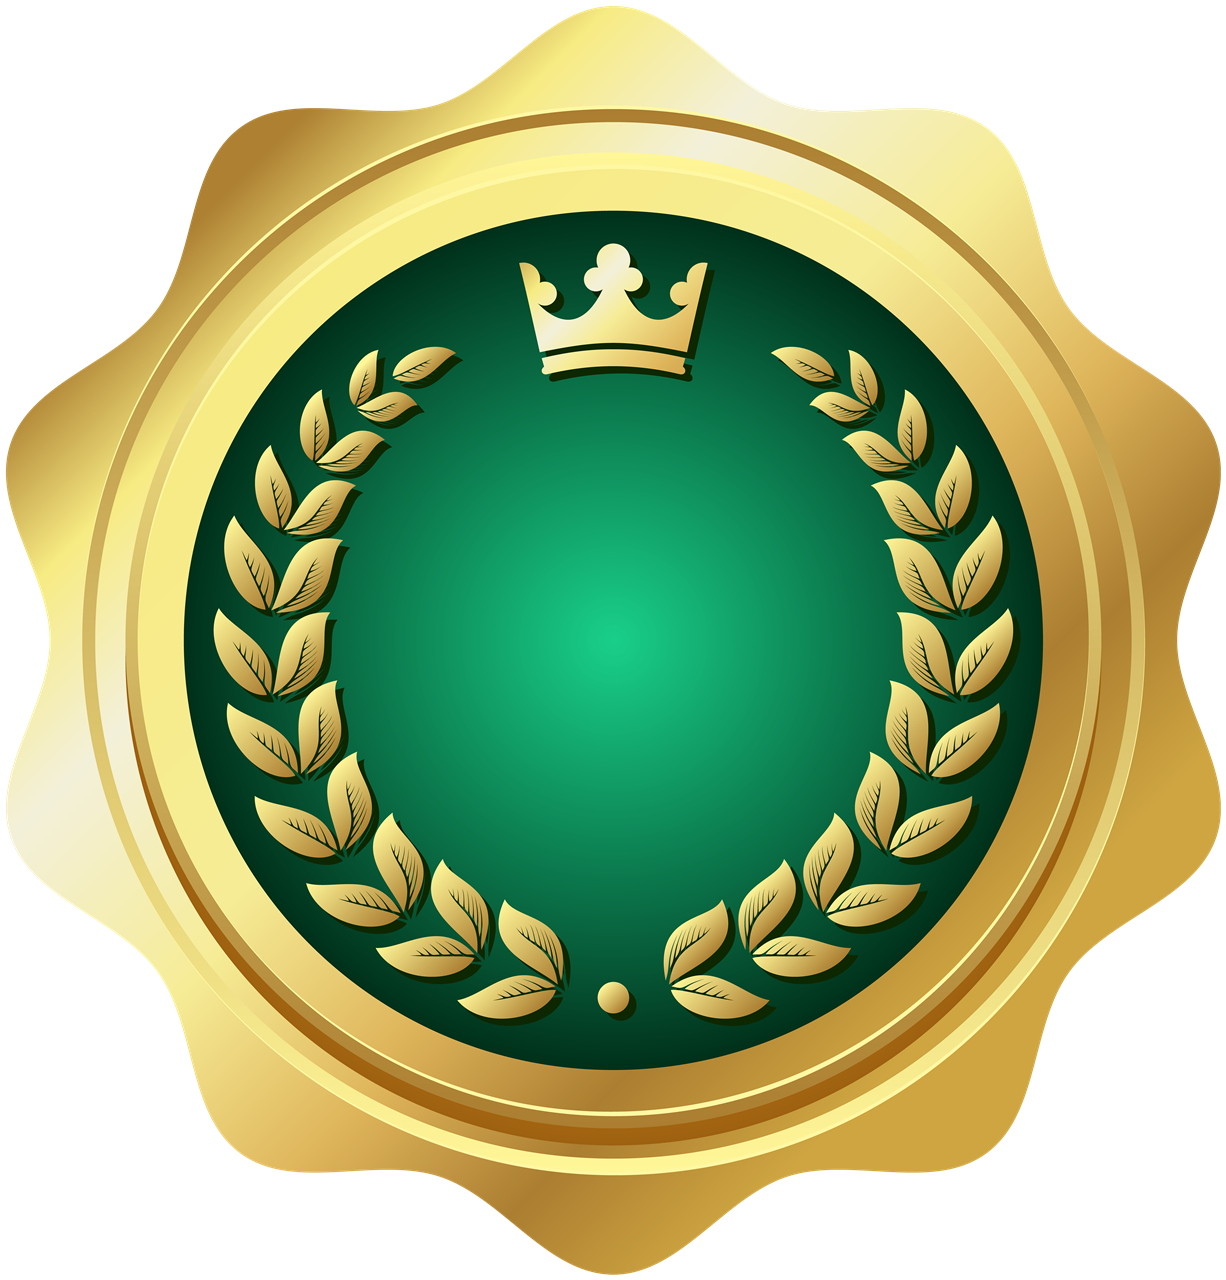 Golden Badge PNG Free Download